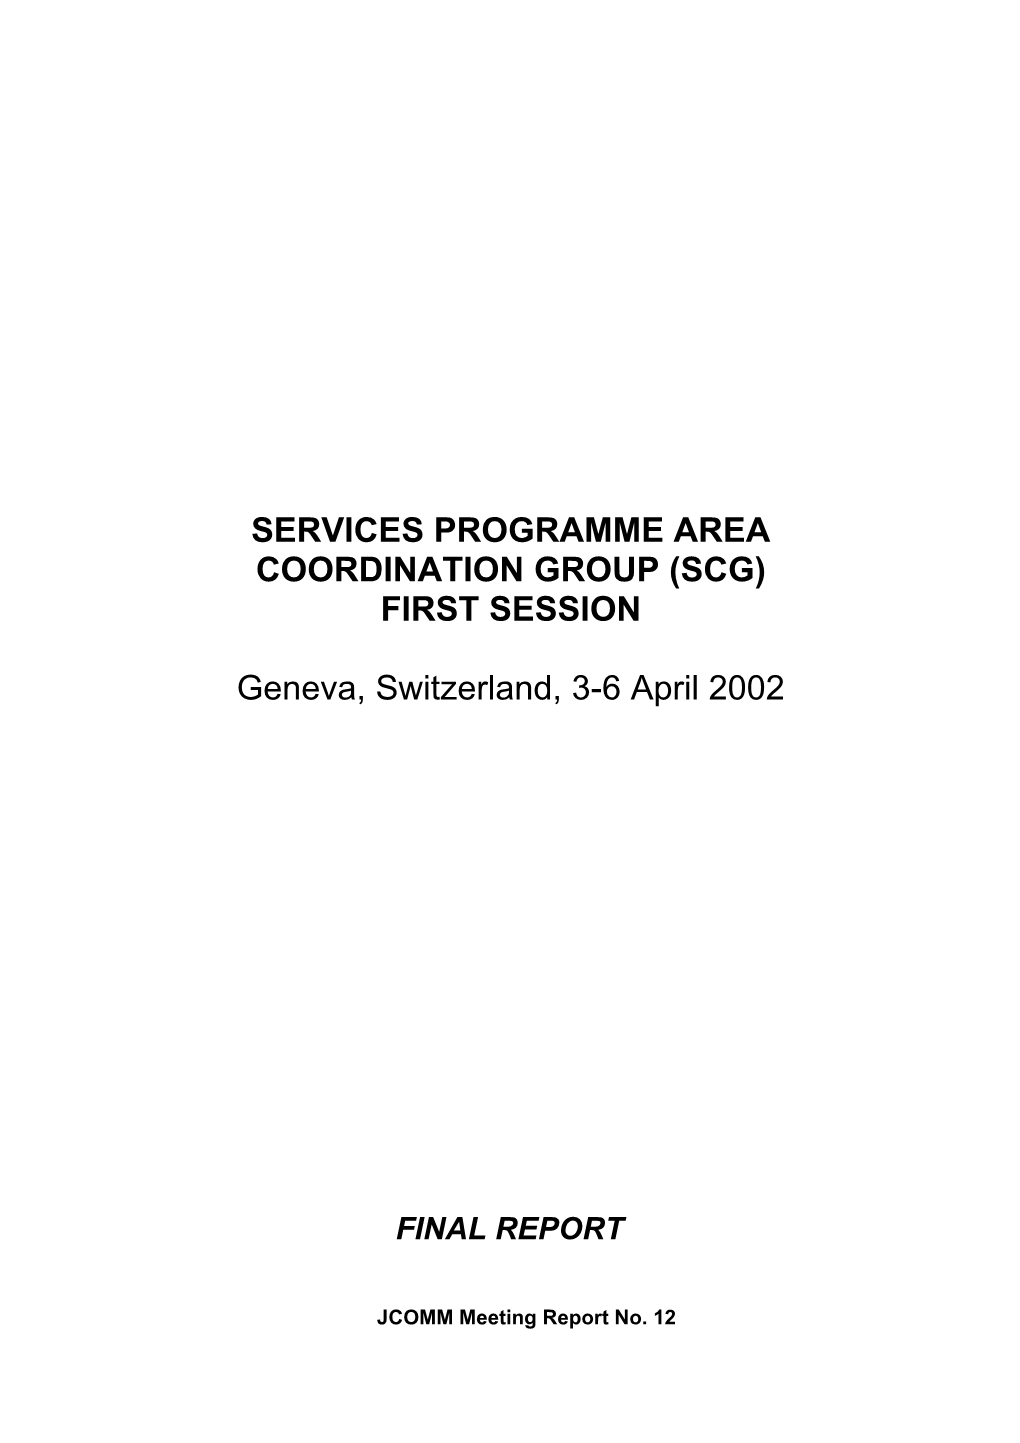 Services Programme Area Coordinationgroup (Scg)